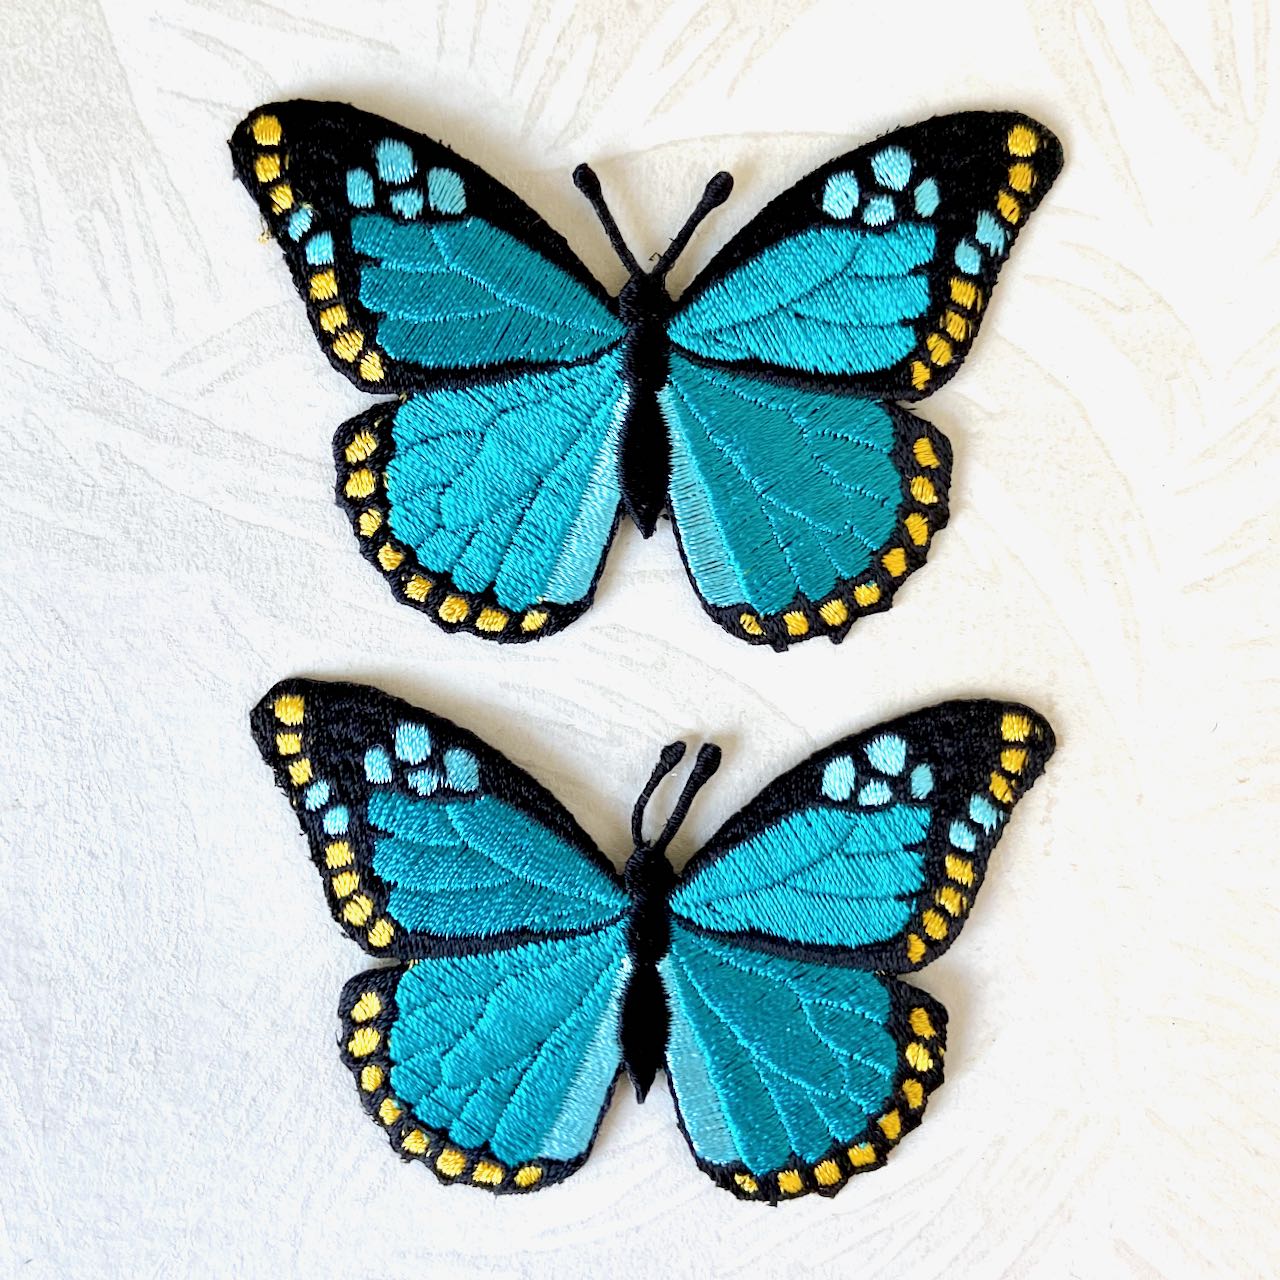     Butterfly_Patch_Blue